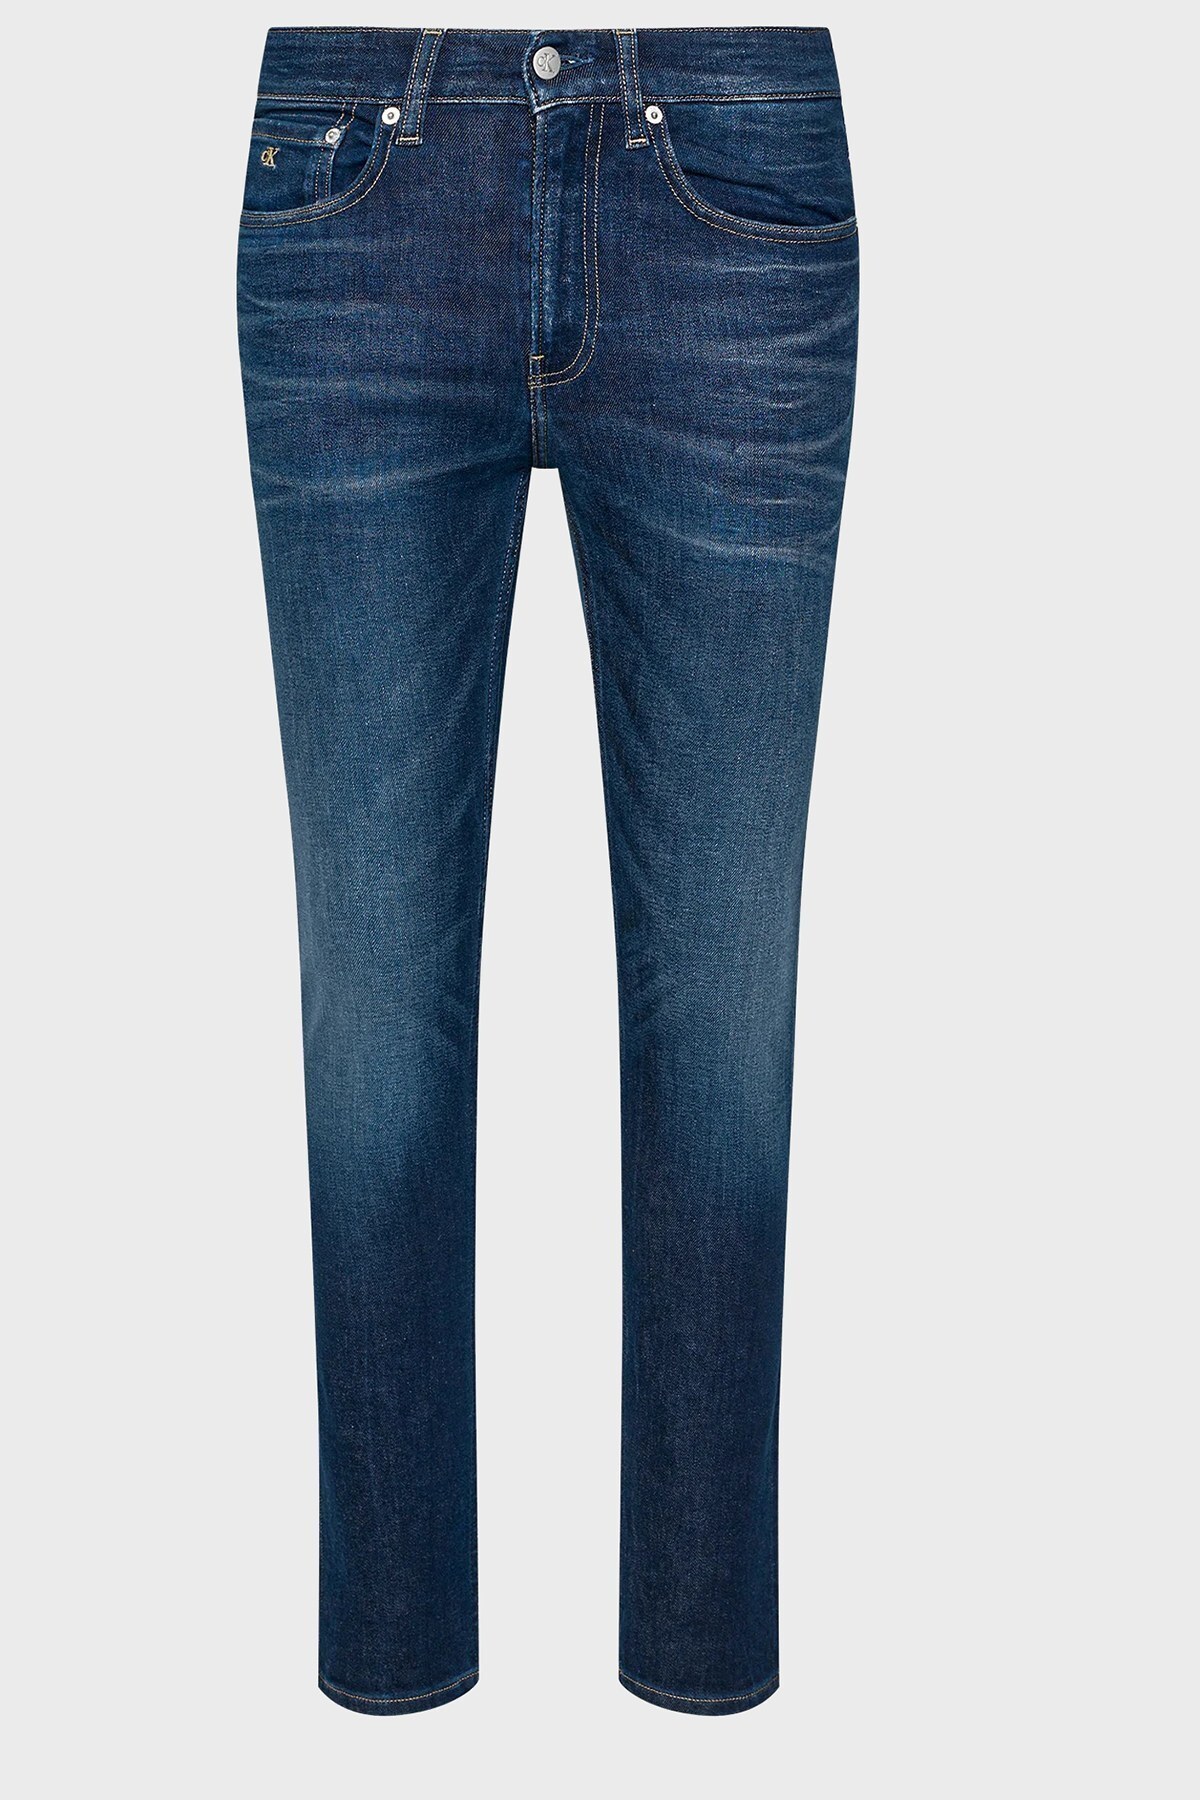 Calvin Klein Skinny Fit Düşük Bel Dar Paça Pamuklu Jeans Erkek Kot Pantolon J30J317658 1BJ LACİVERT